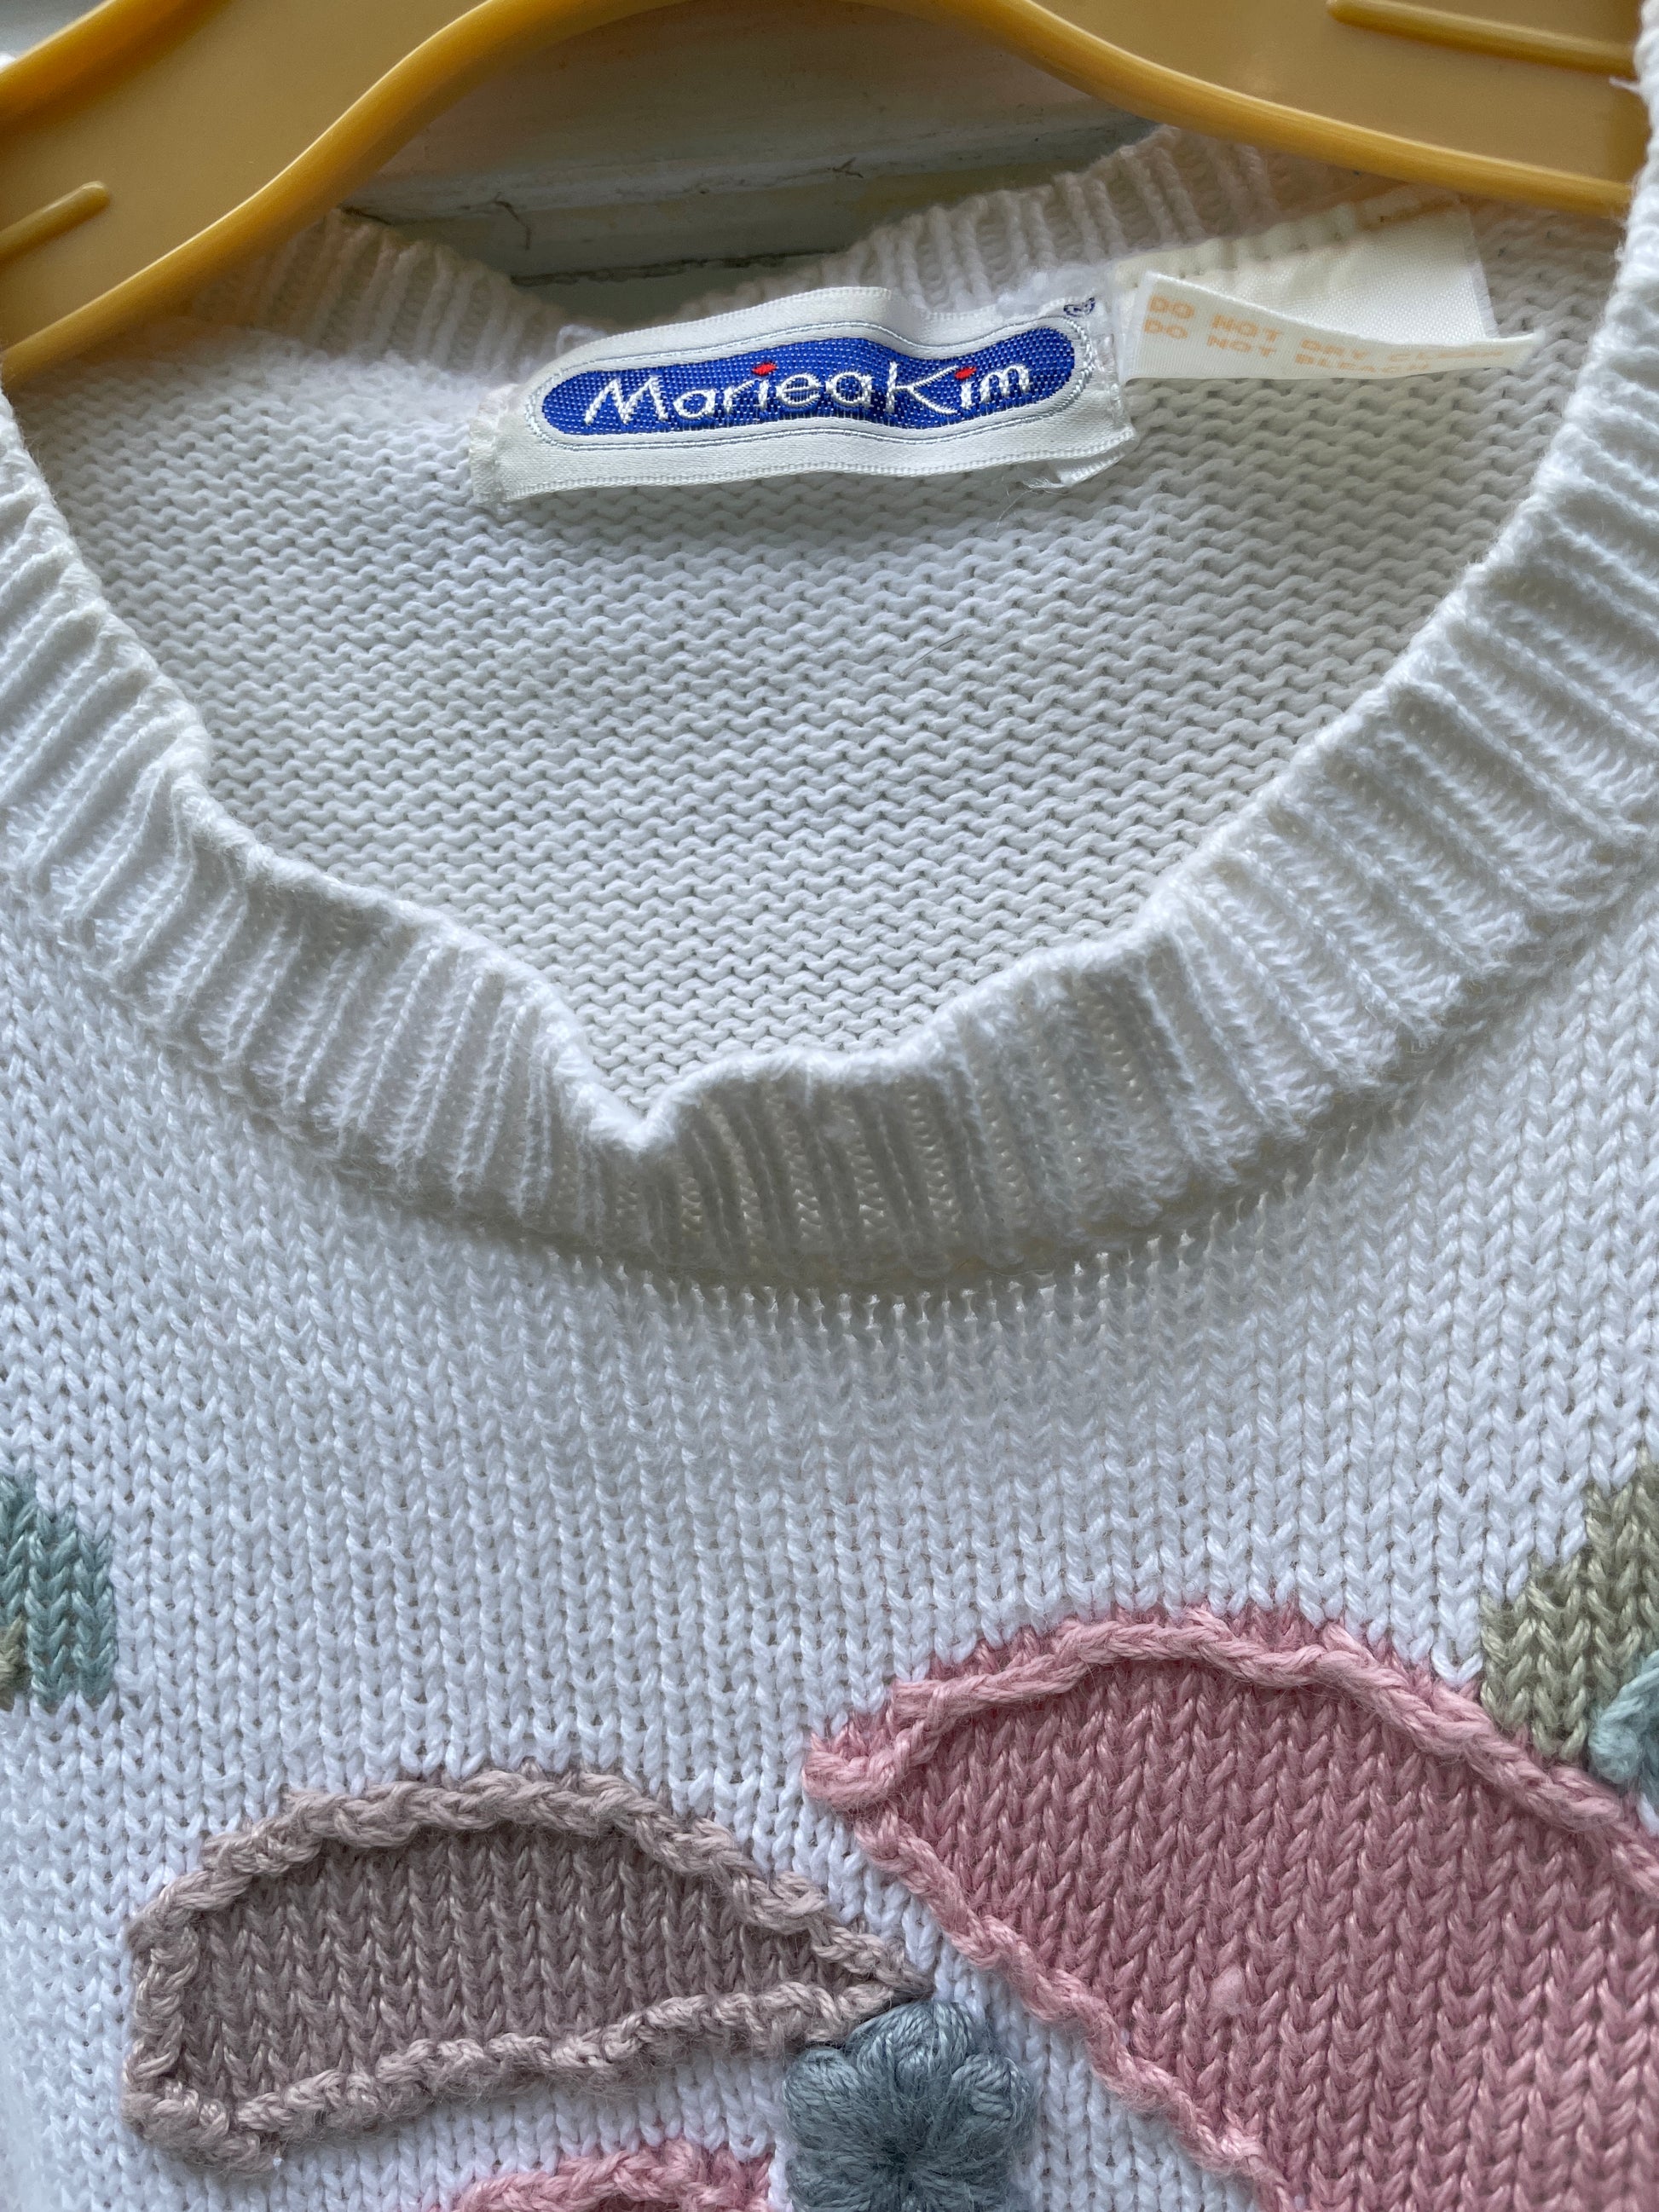  70s Mariea Kim Handmade Wool Blend Knit Vest Top